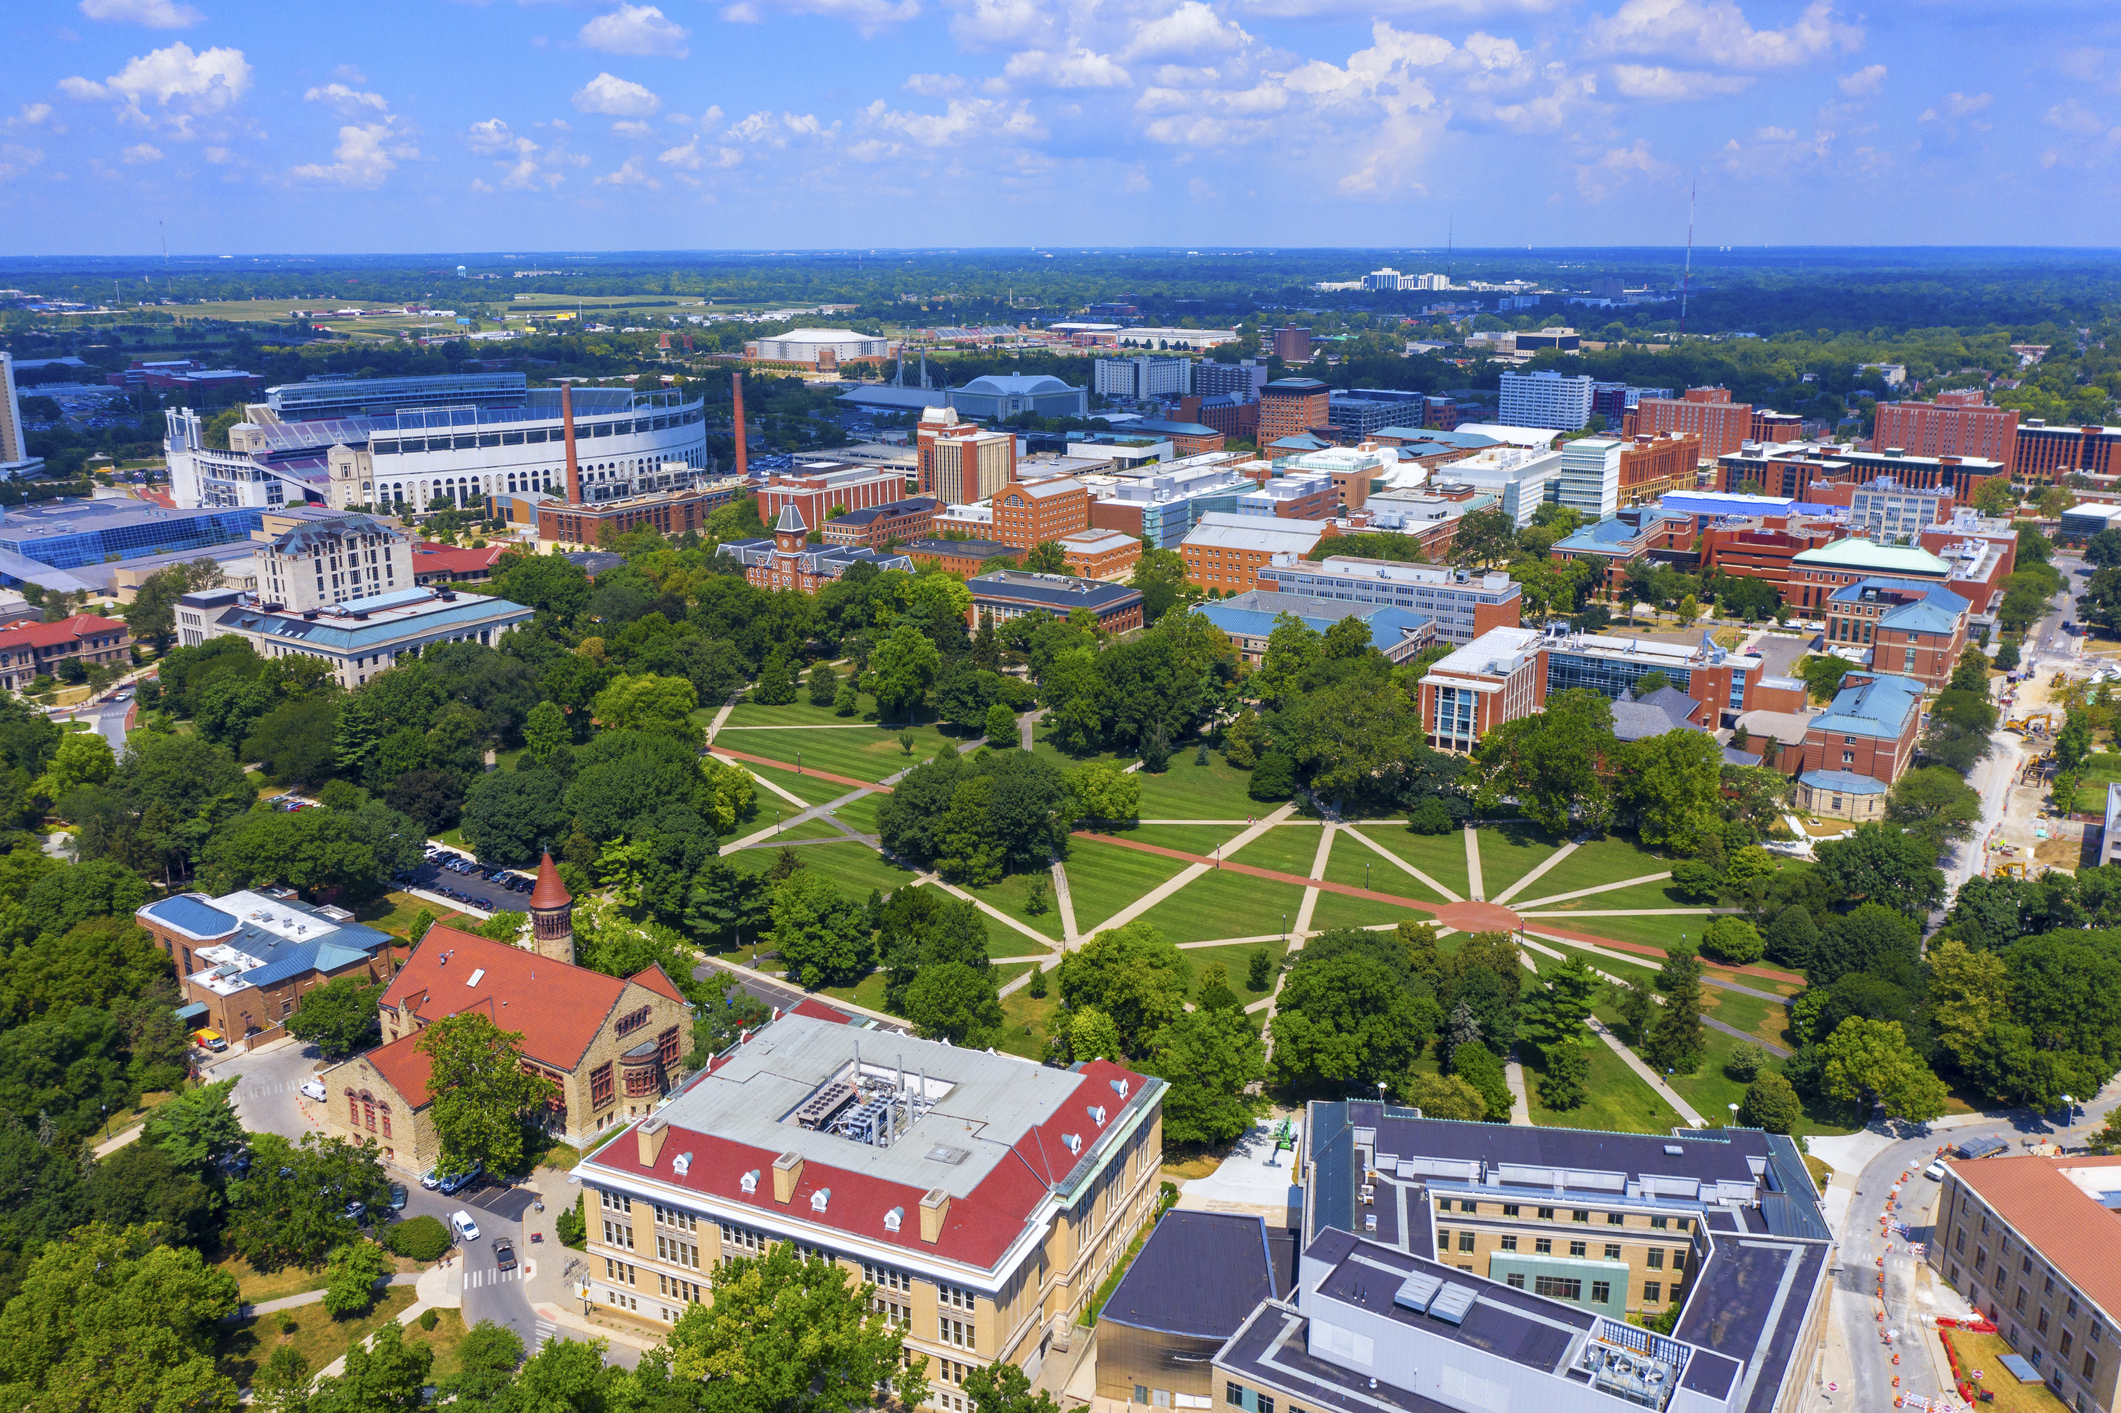 Aerial view of Ohio State Campus